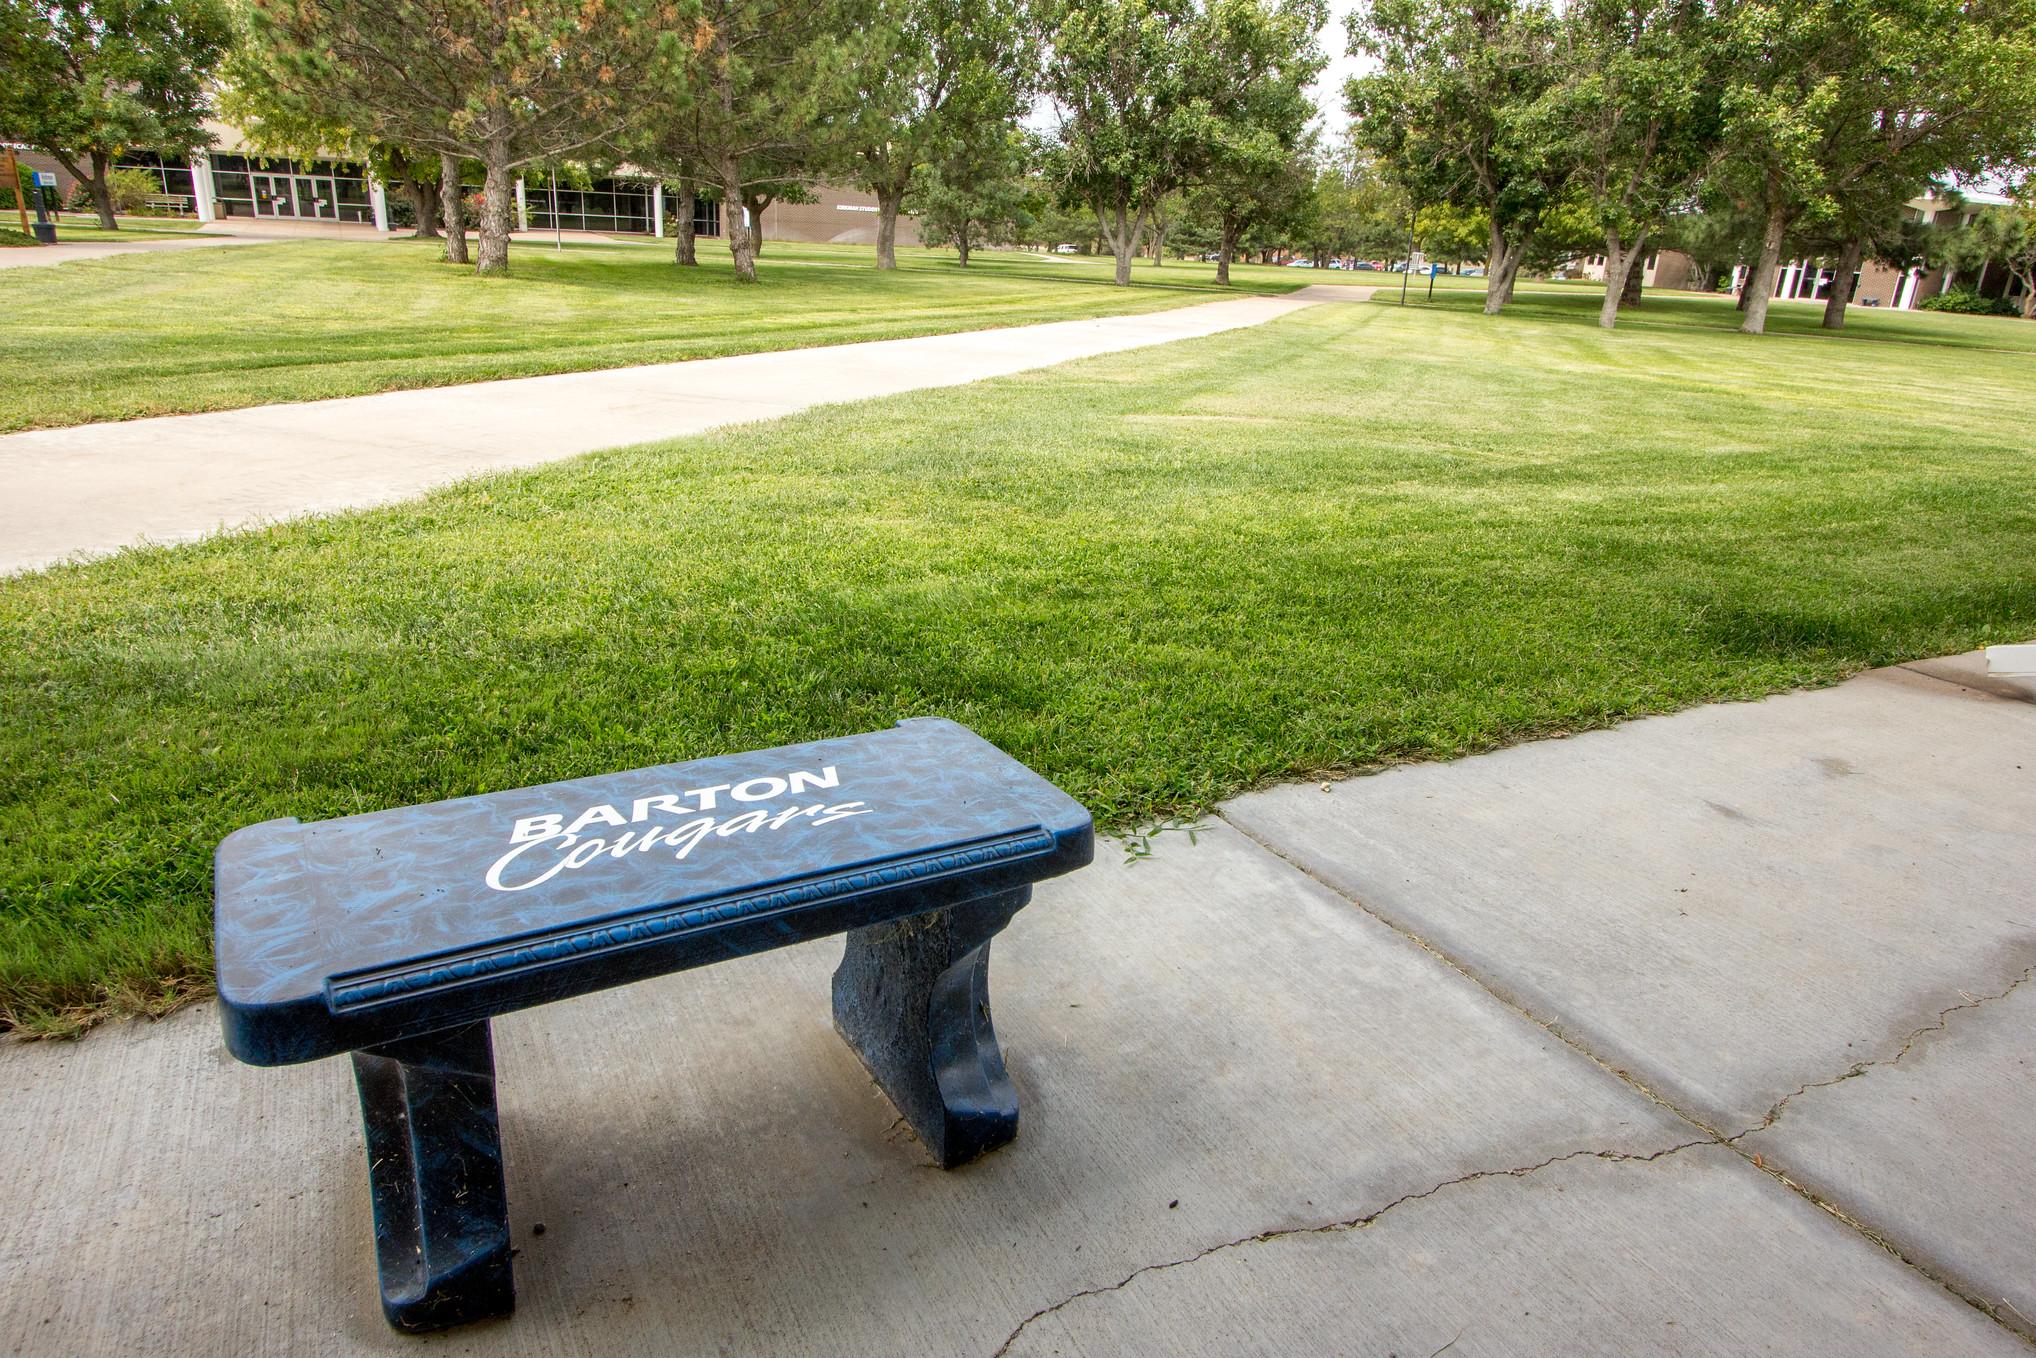 Barton Cougars bench on campus